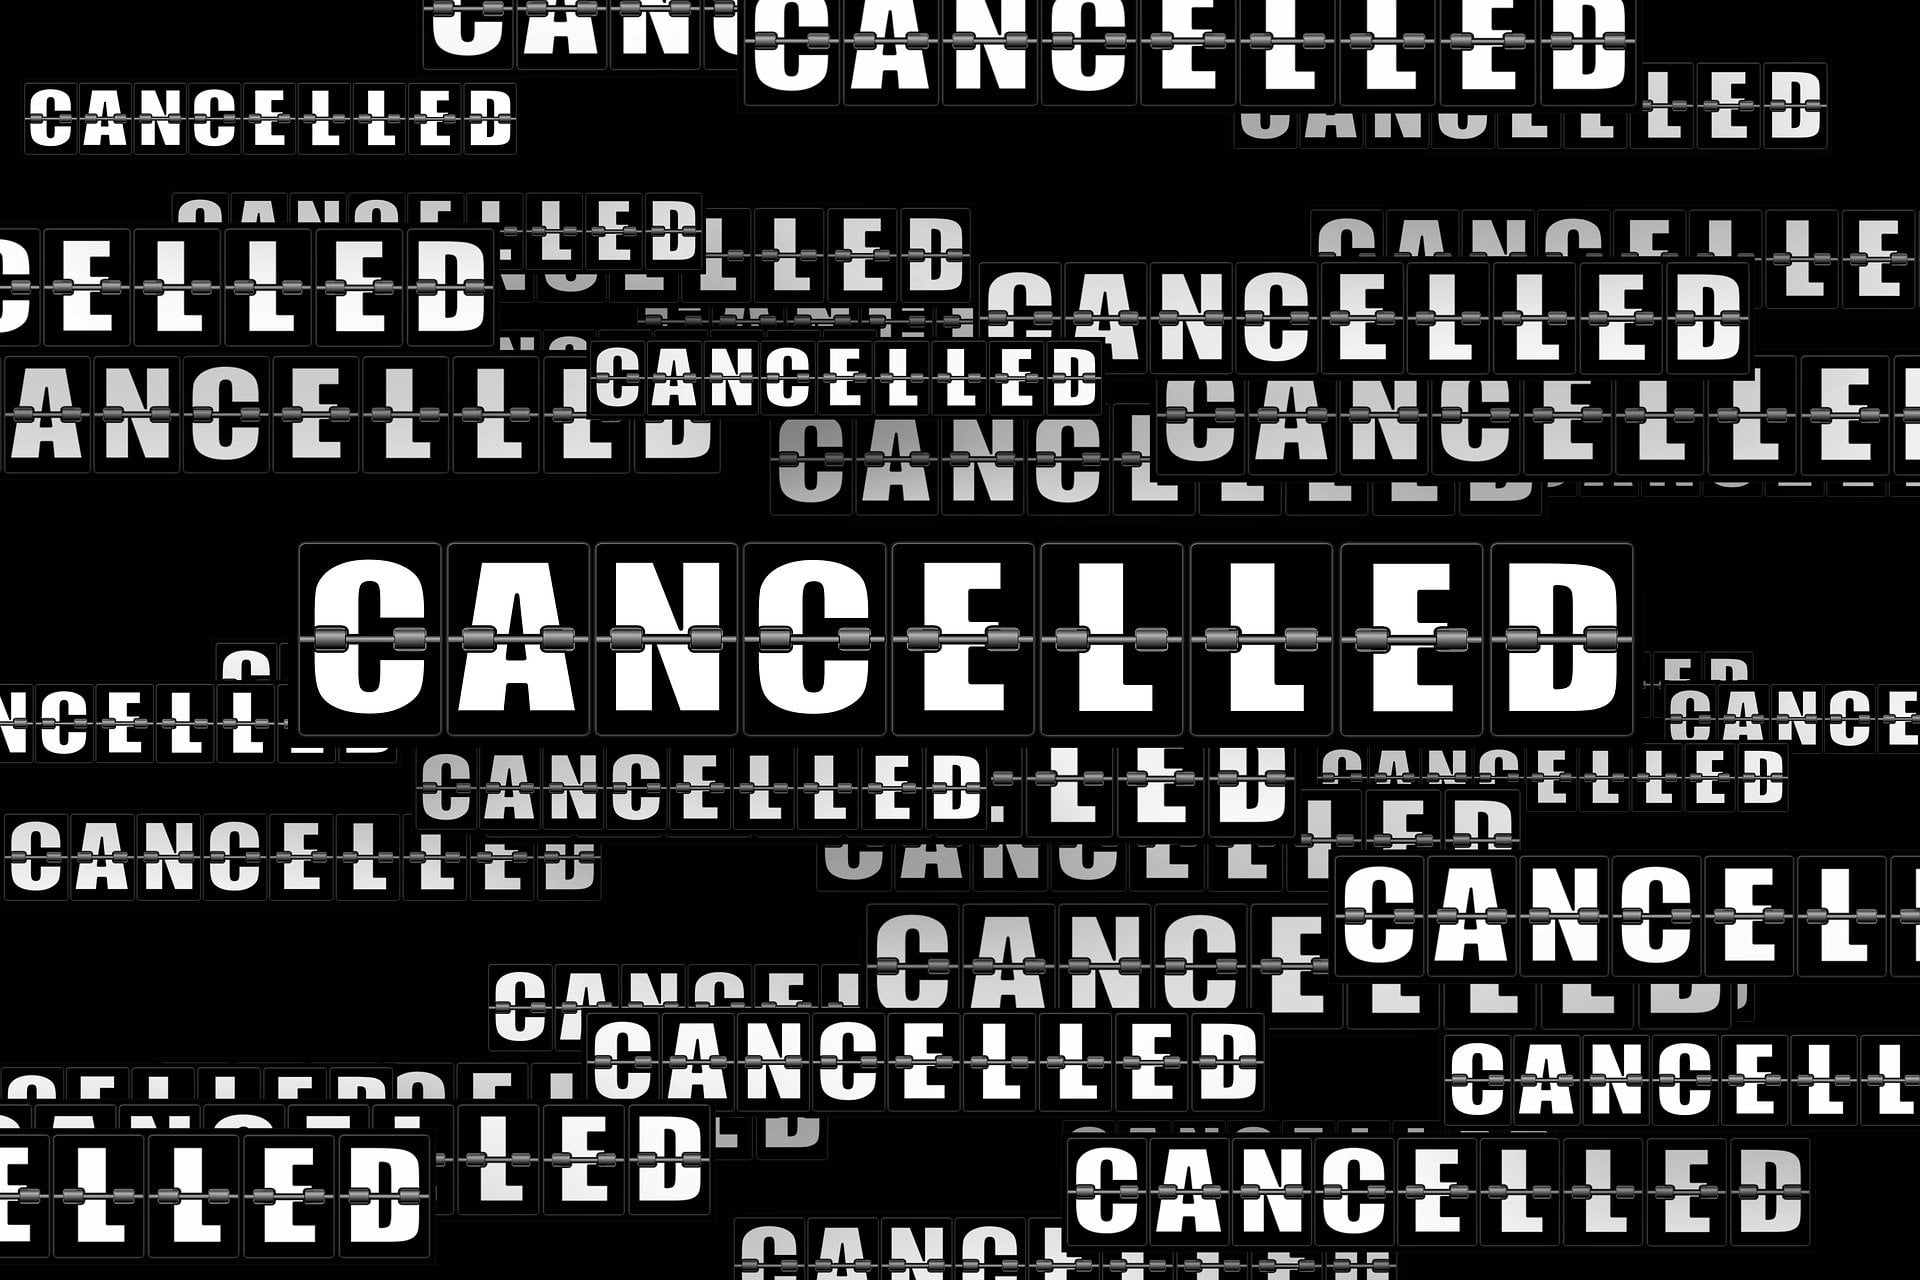 Cancellation via pixabay